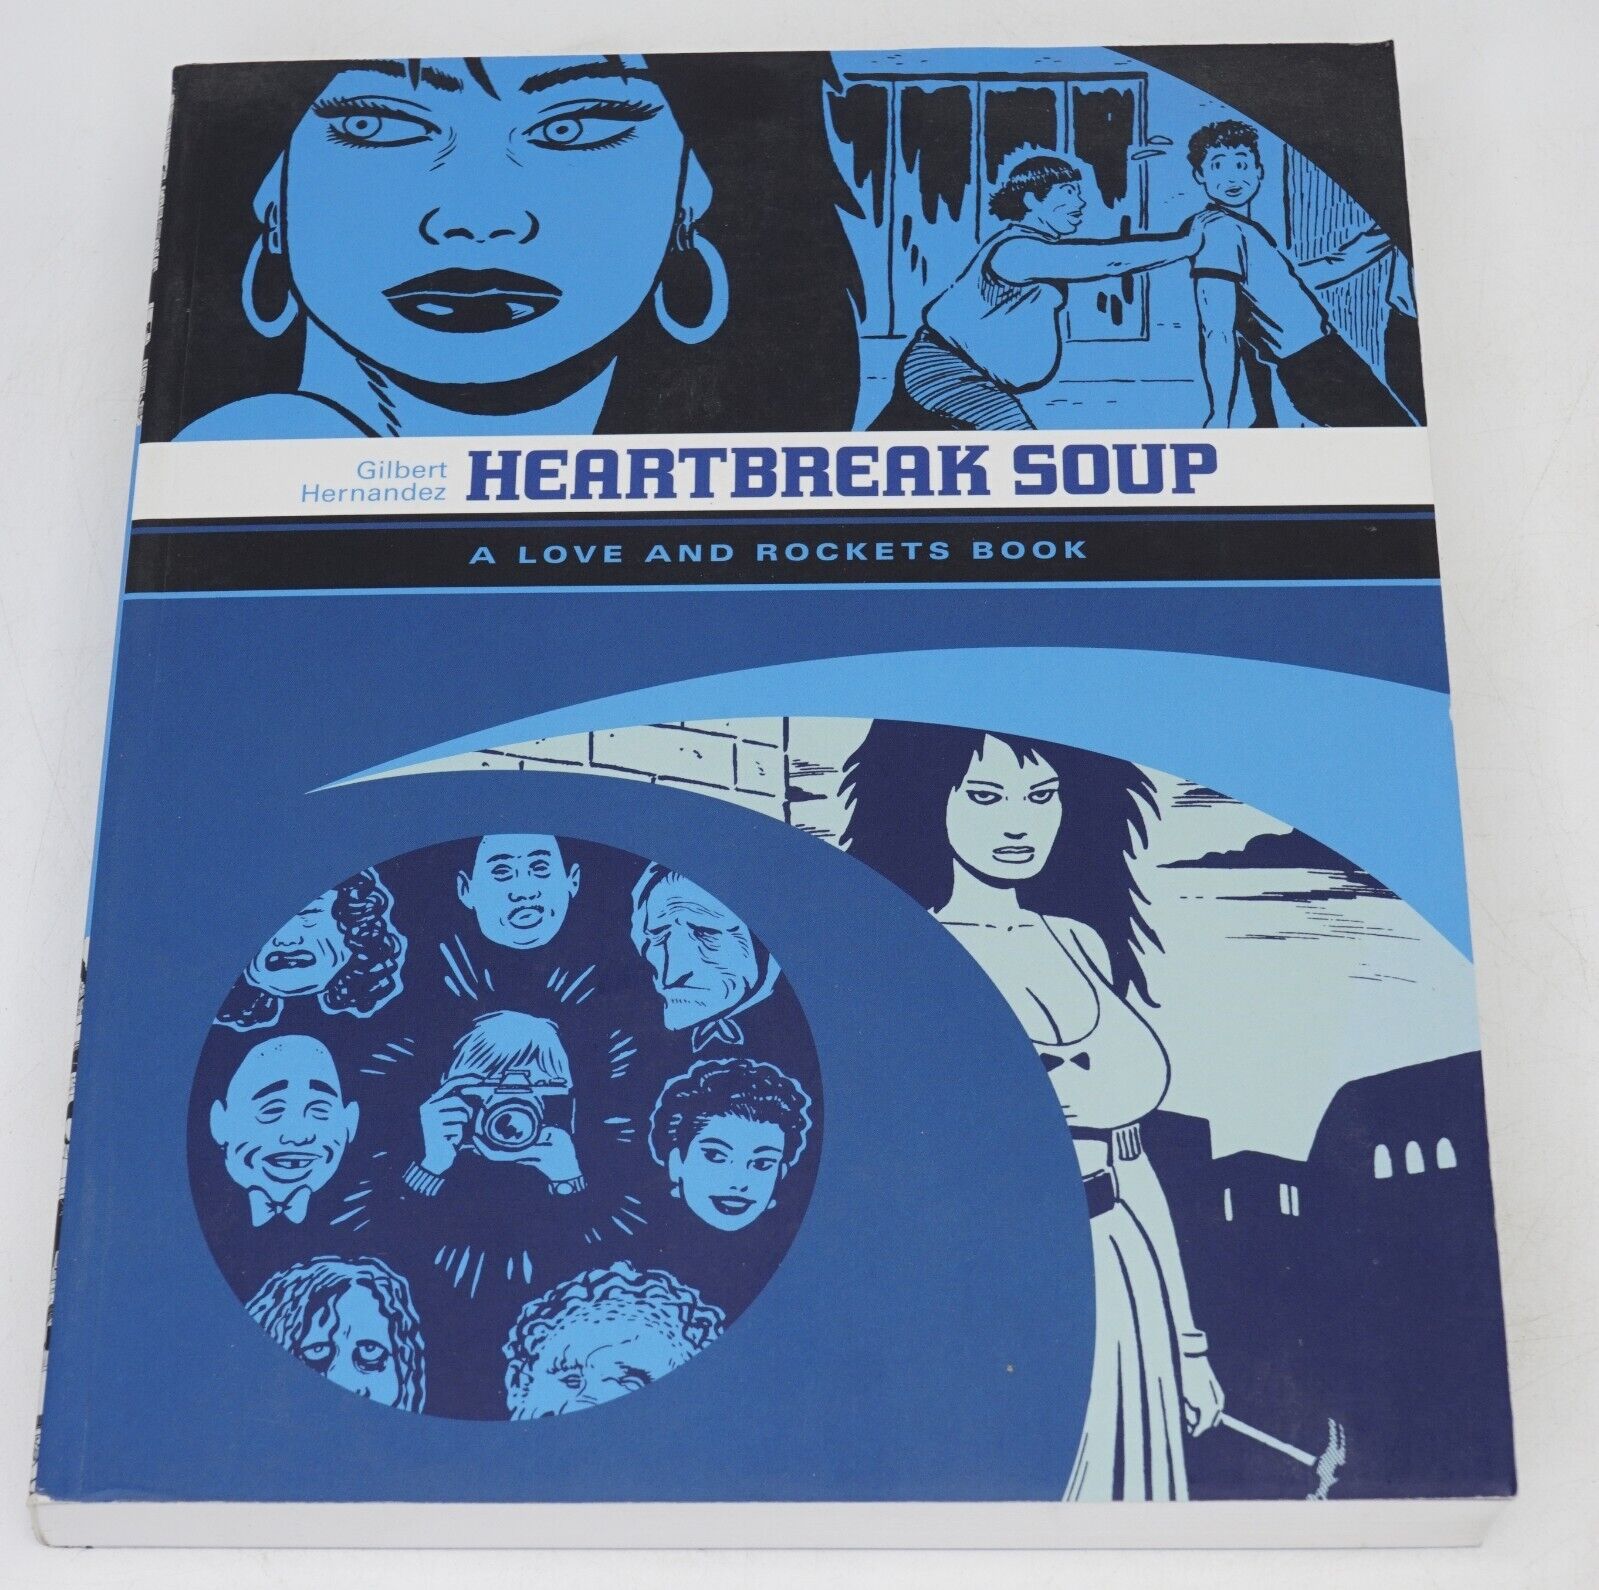 Heartbreak Soup - A Love And Rockets Book by Gilbert Hernandez Trade Paperback